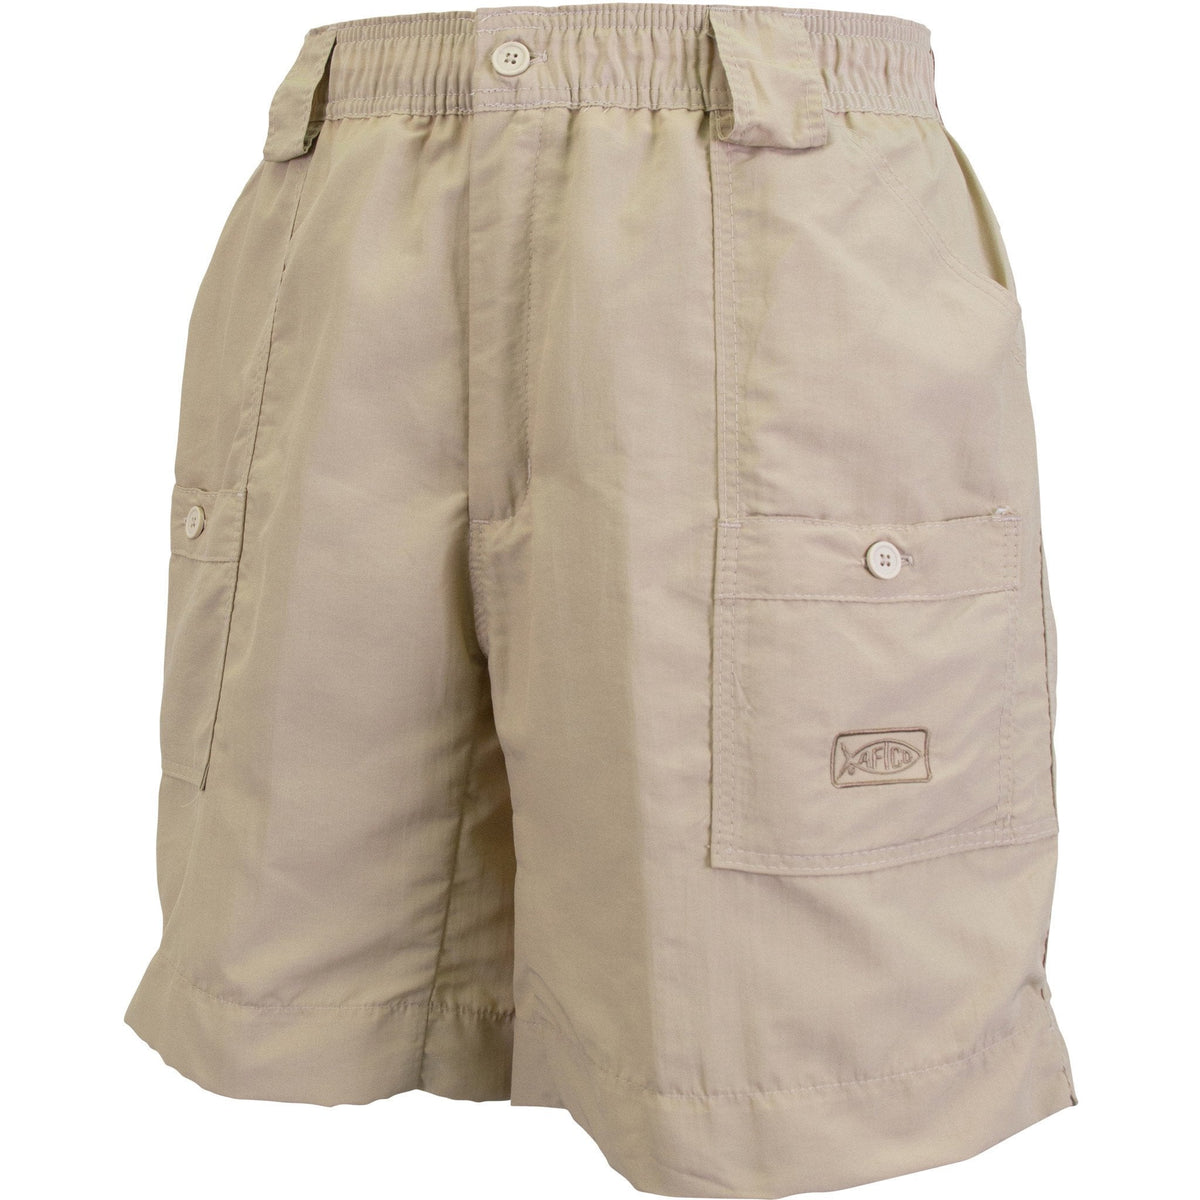 AFTCO Original Fishing Shorts Long - Khaki